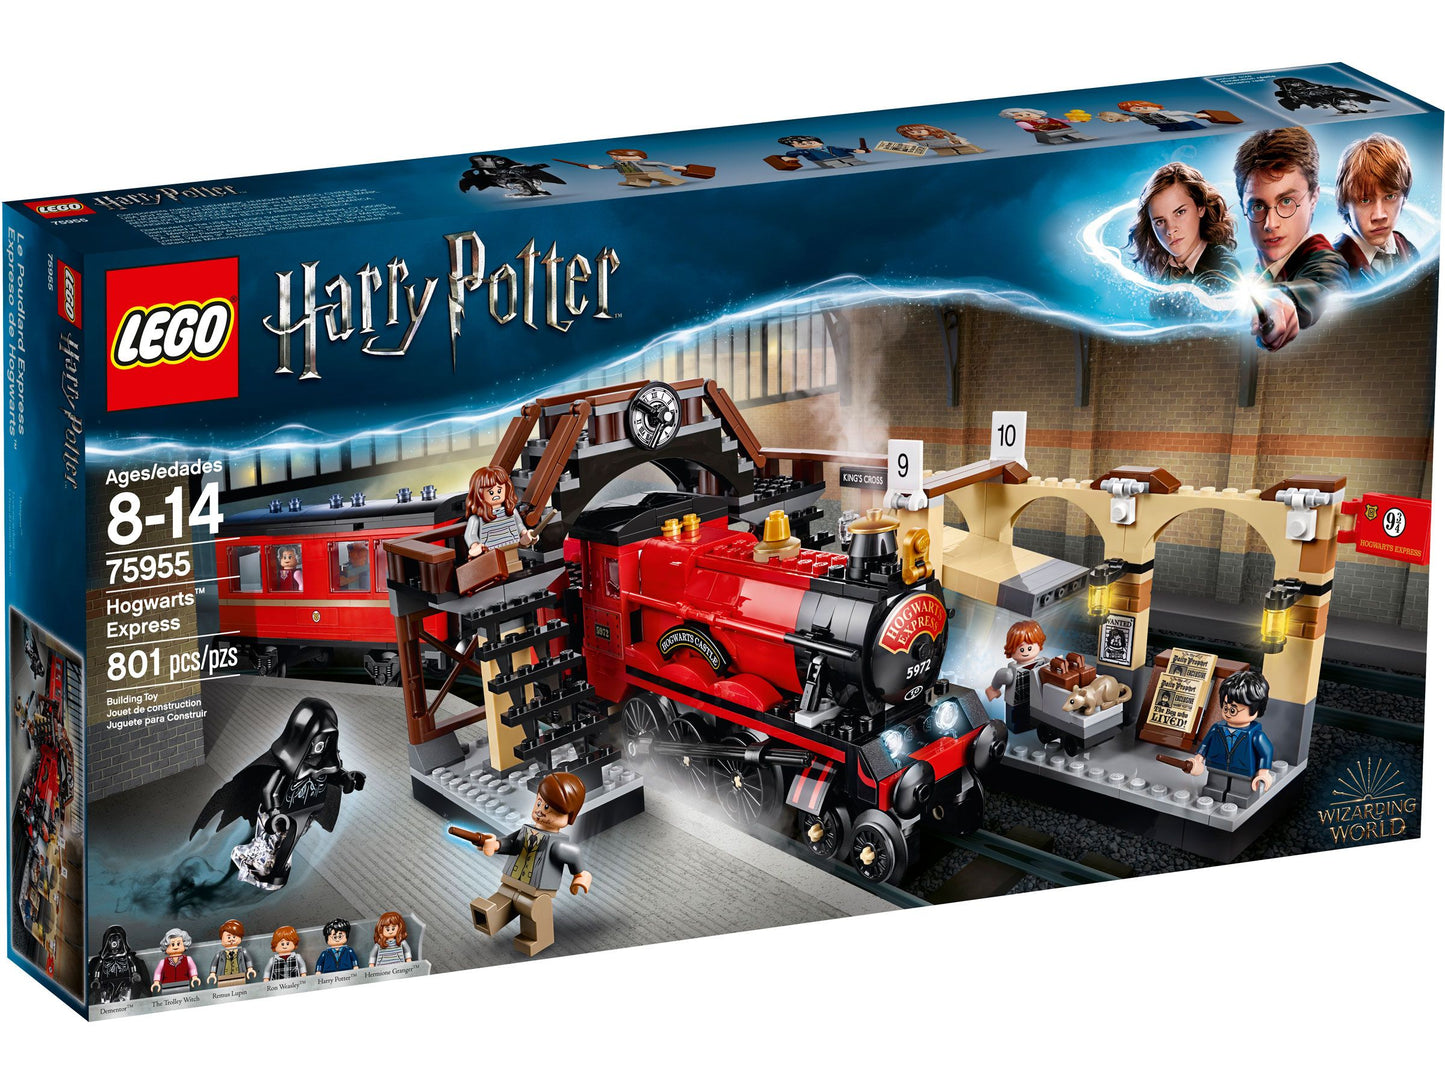 Harry Potter 75955 Hogwarts Express